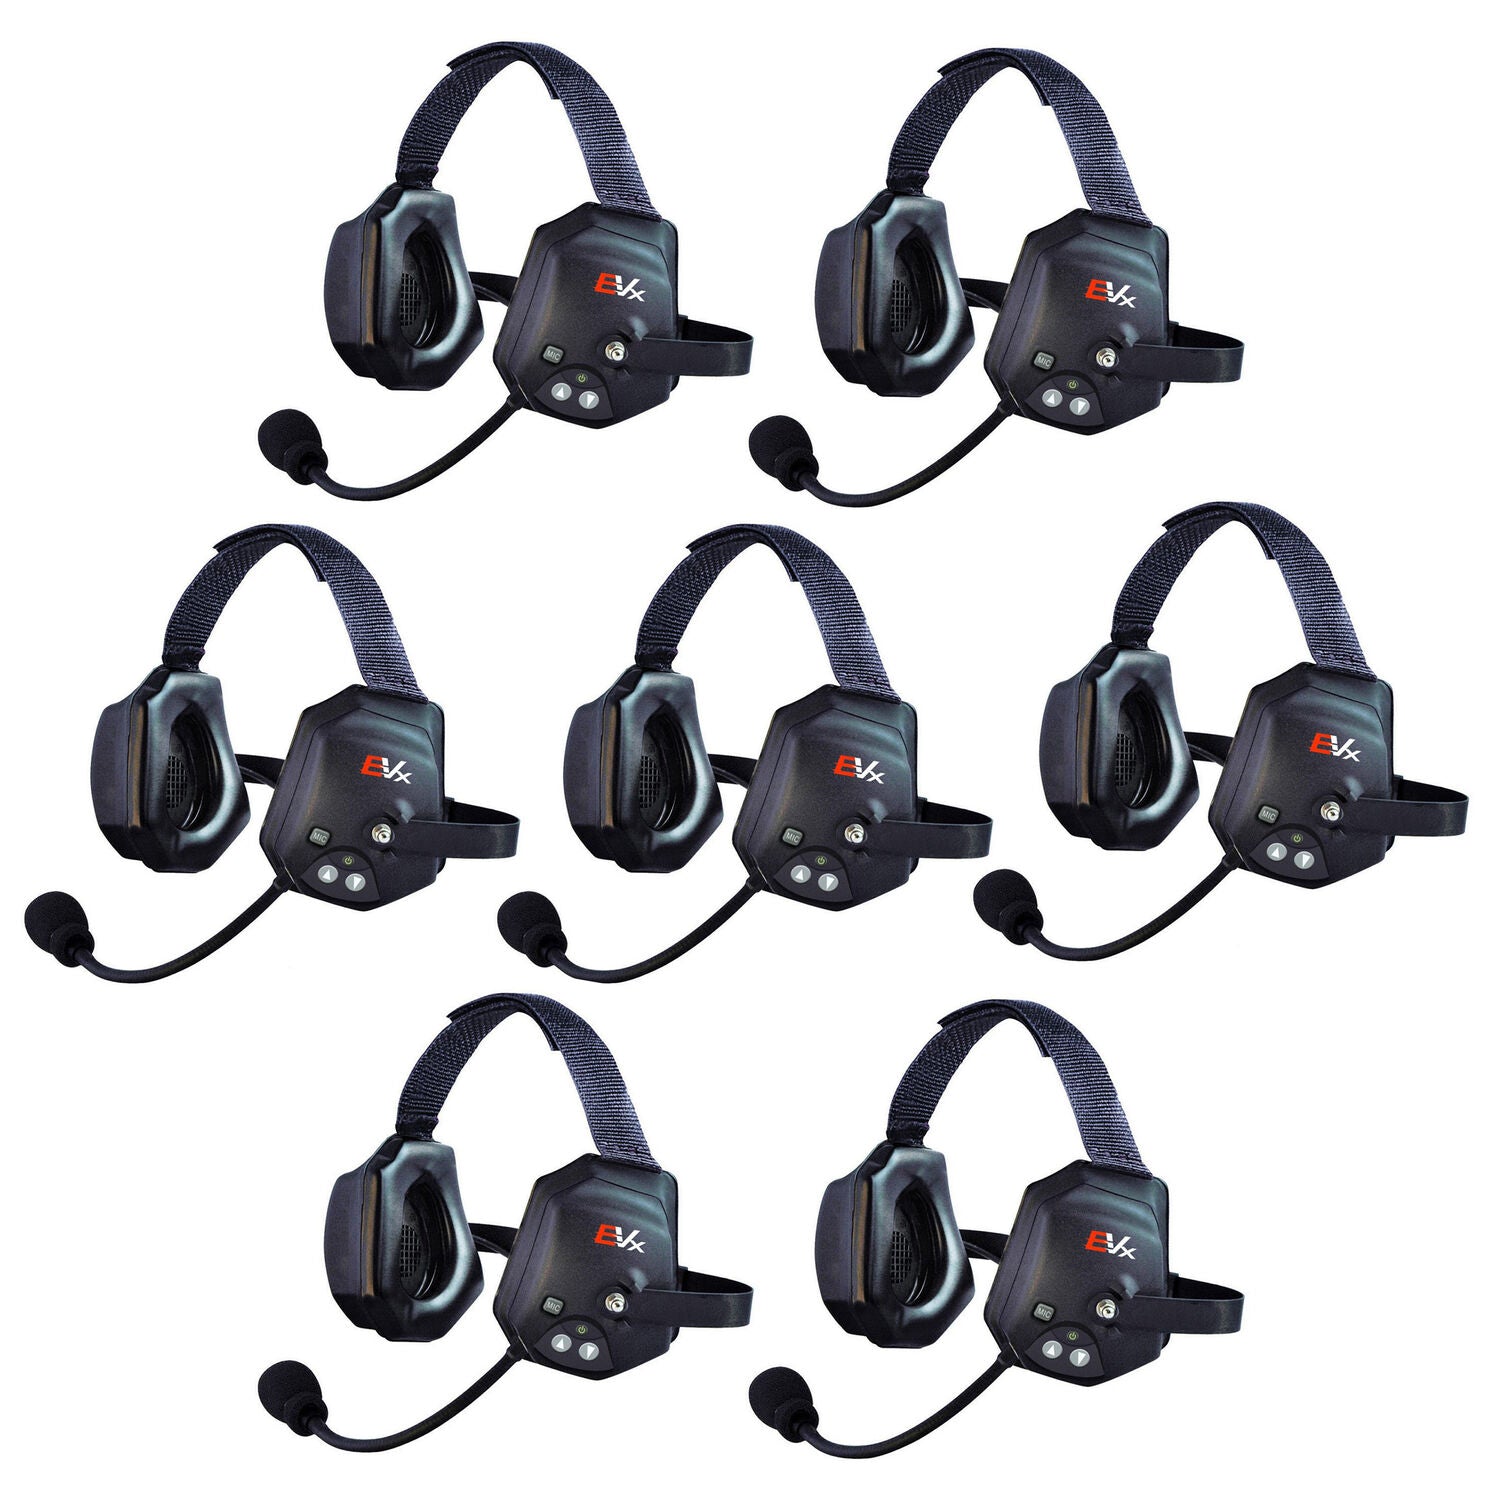 Eartec Co EVXT7 EVADE Full Duplex Wireless Intercom System W/ 7 Headsets